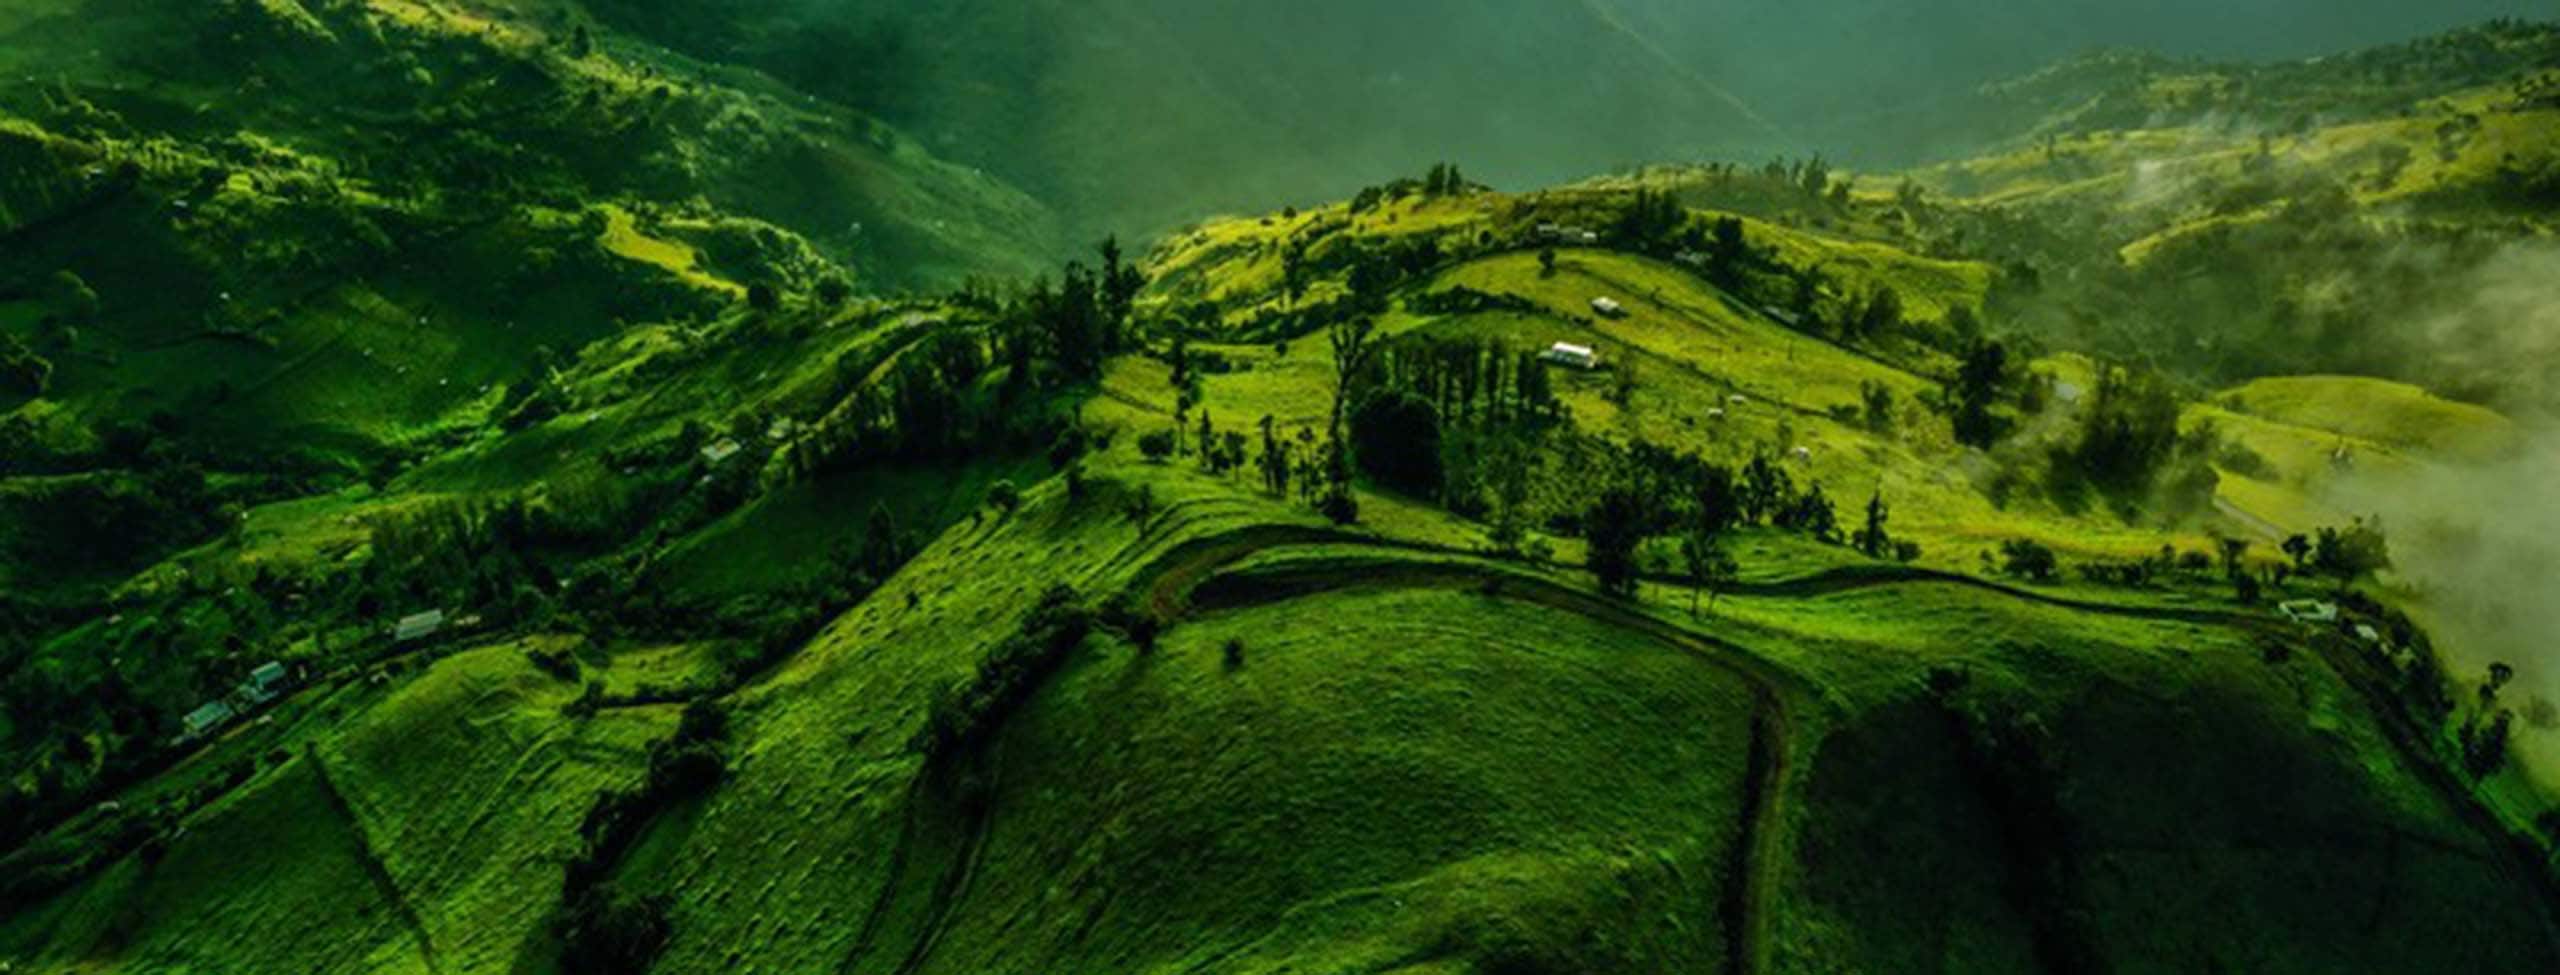 Green_Fields_In_Pinllopata_Ecuador_P_2288-L1v2